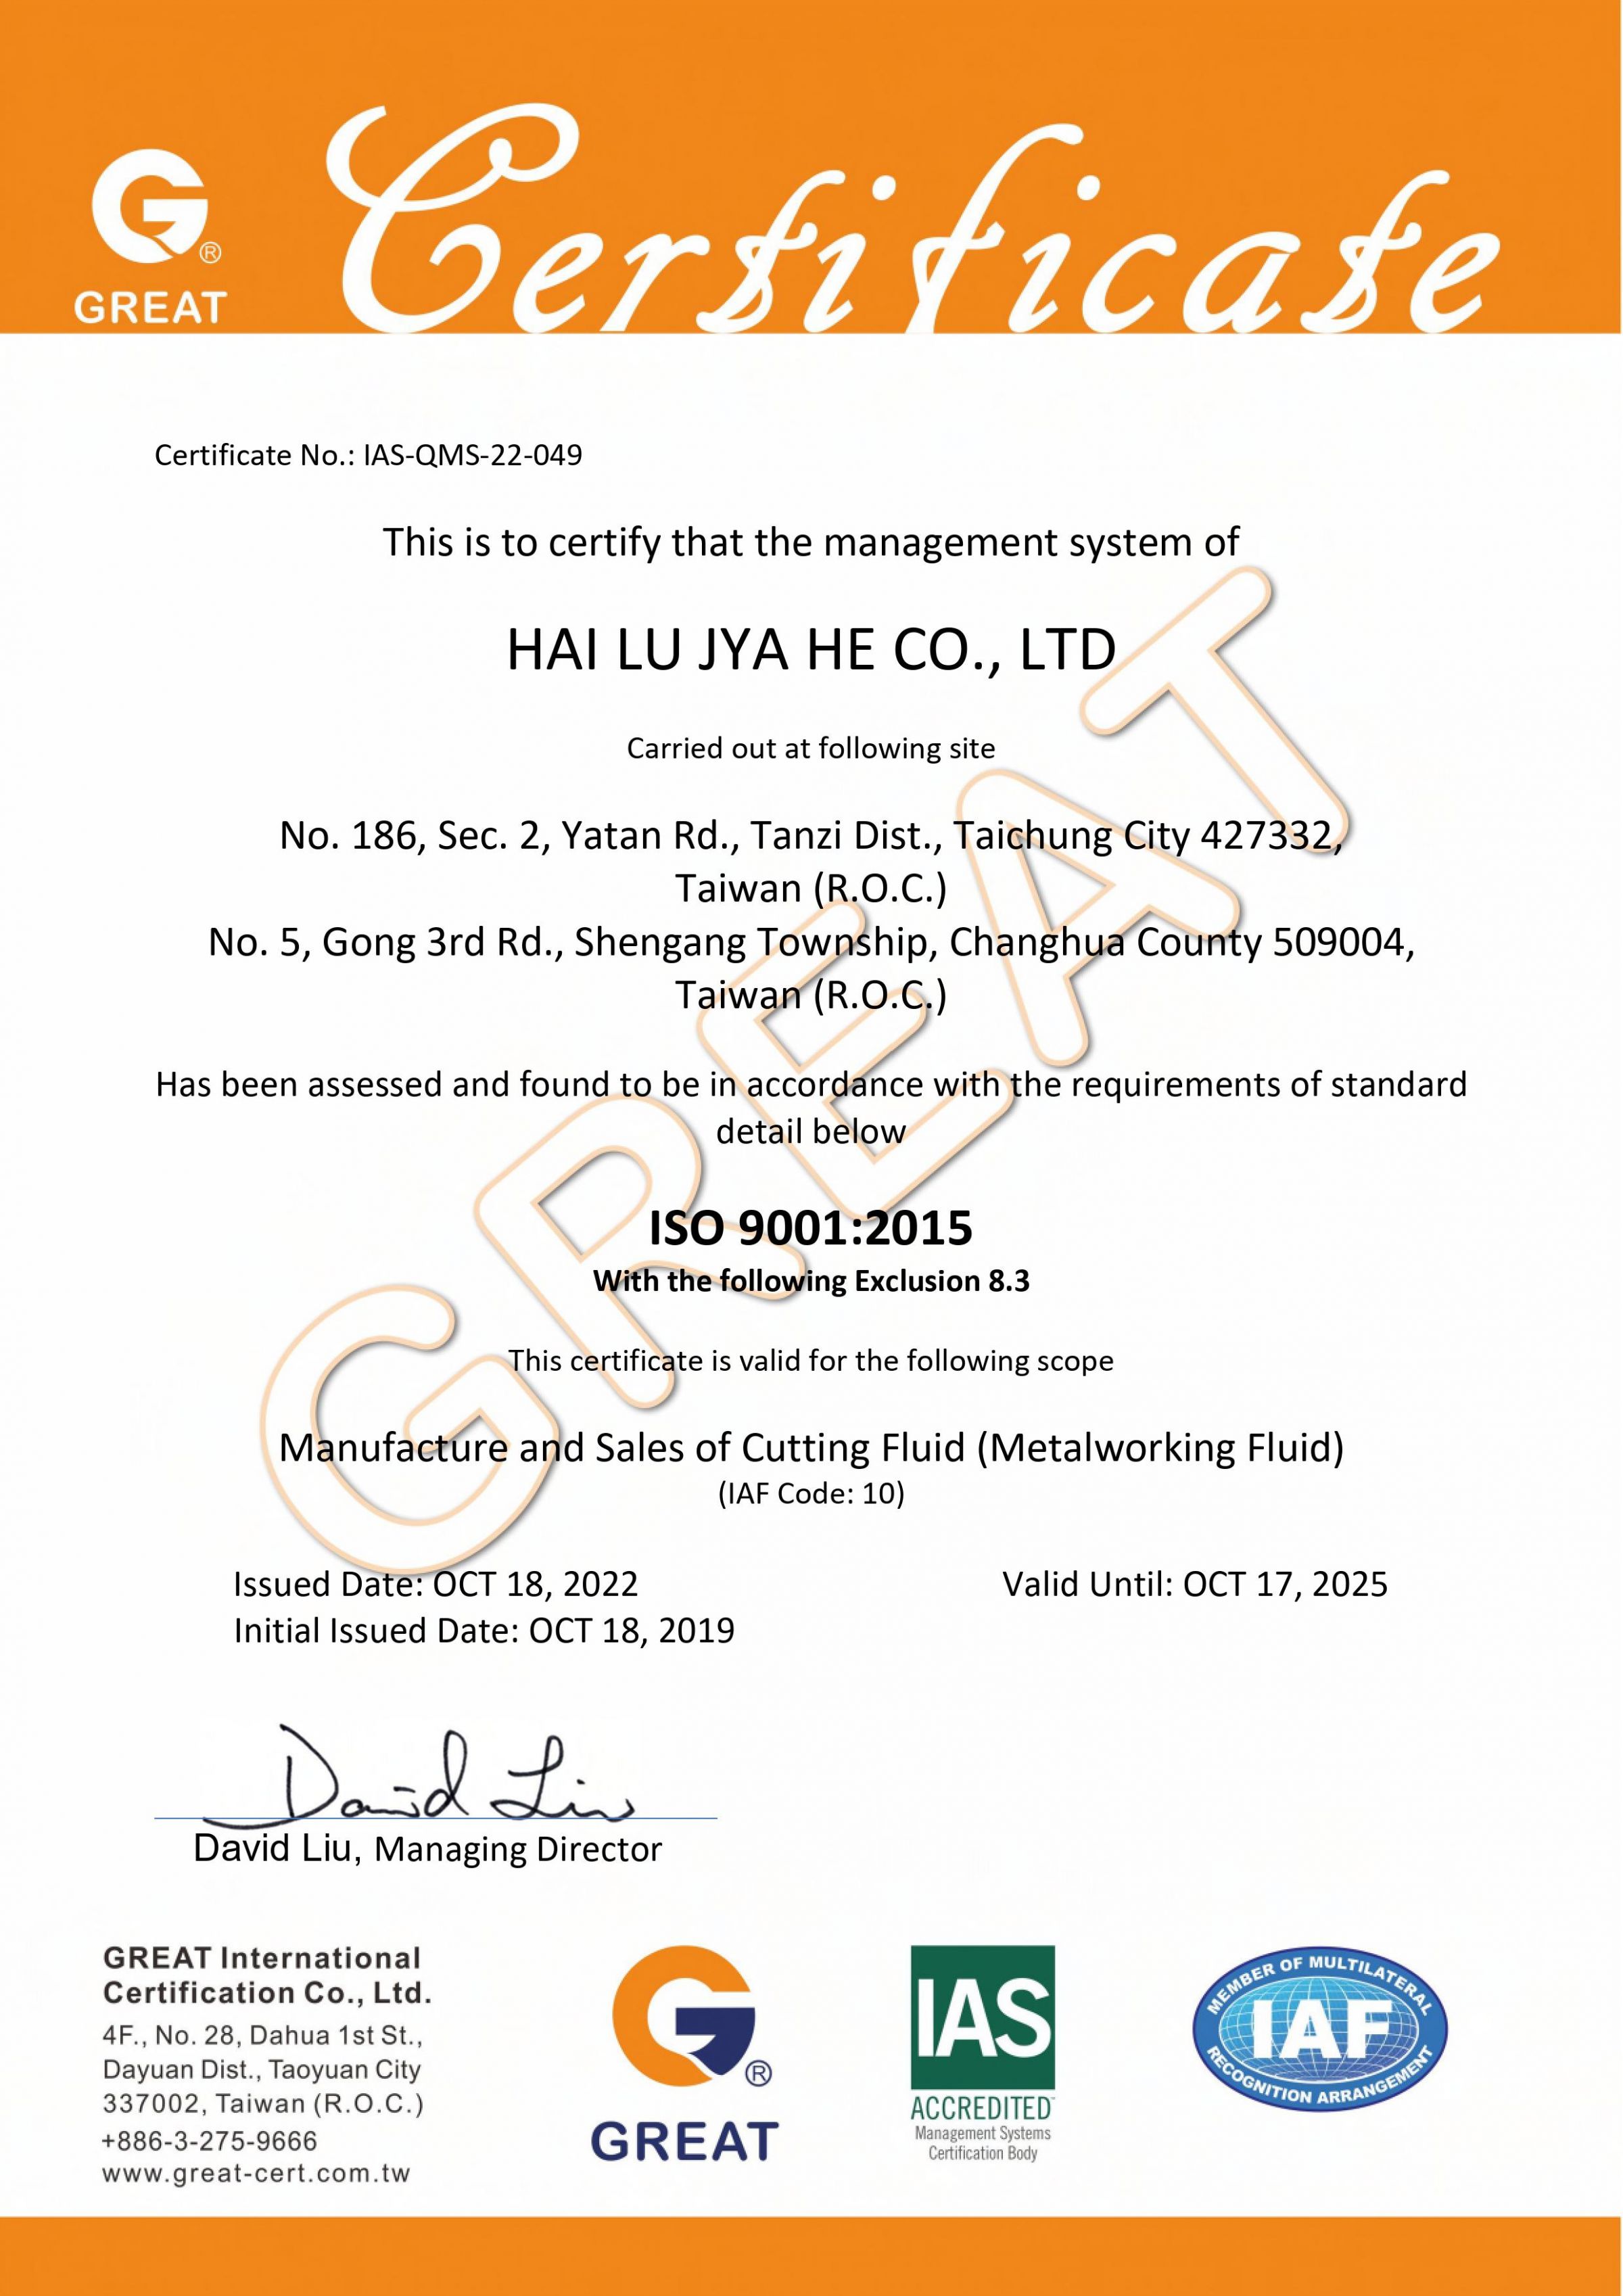 ISO 9001:2015 (Sistem Manajemen Kualitas)